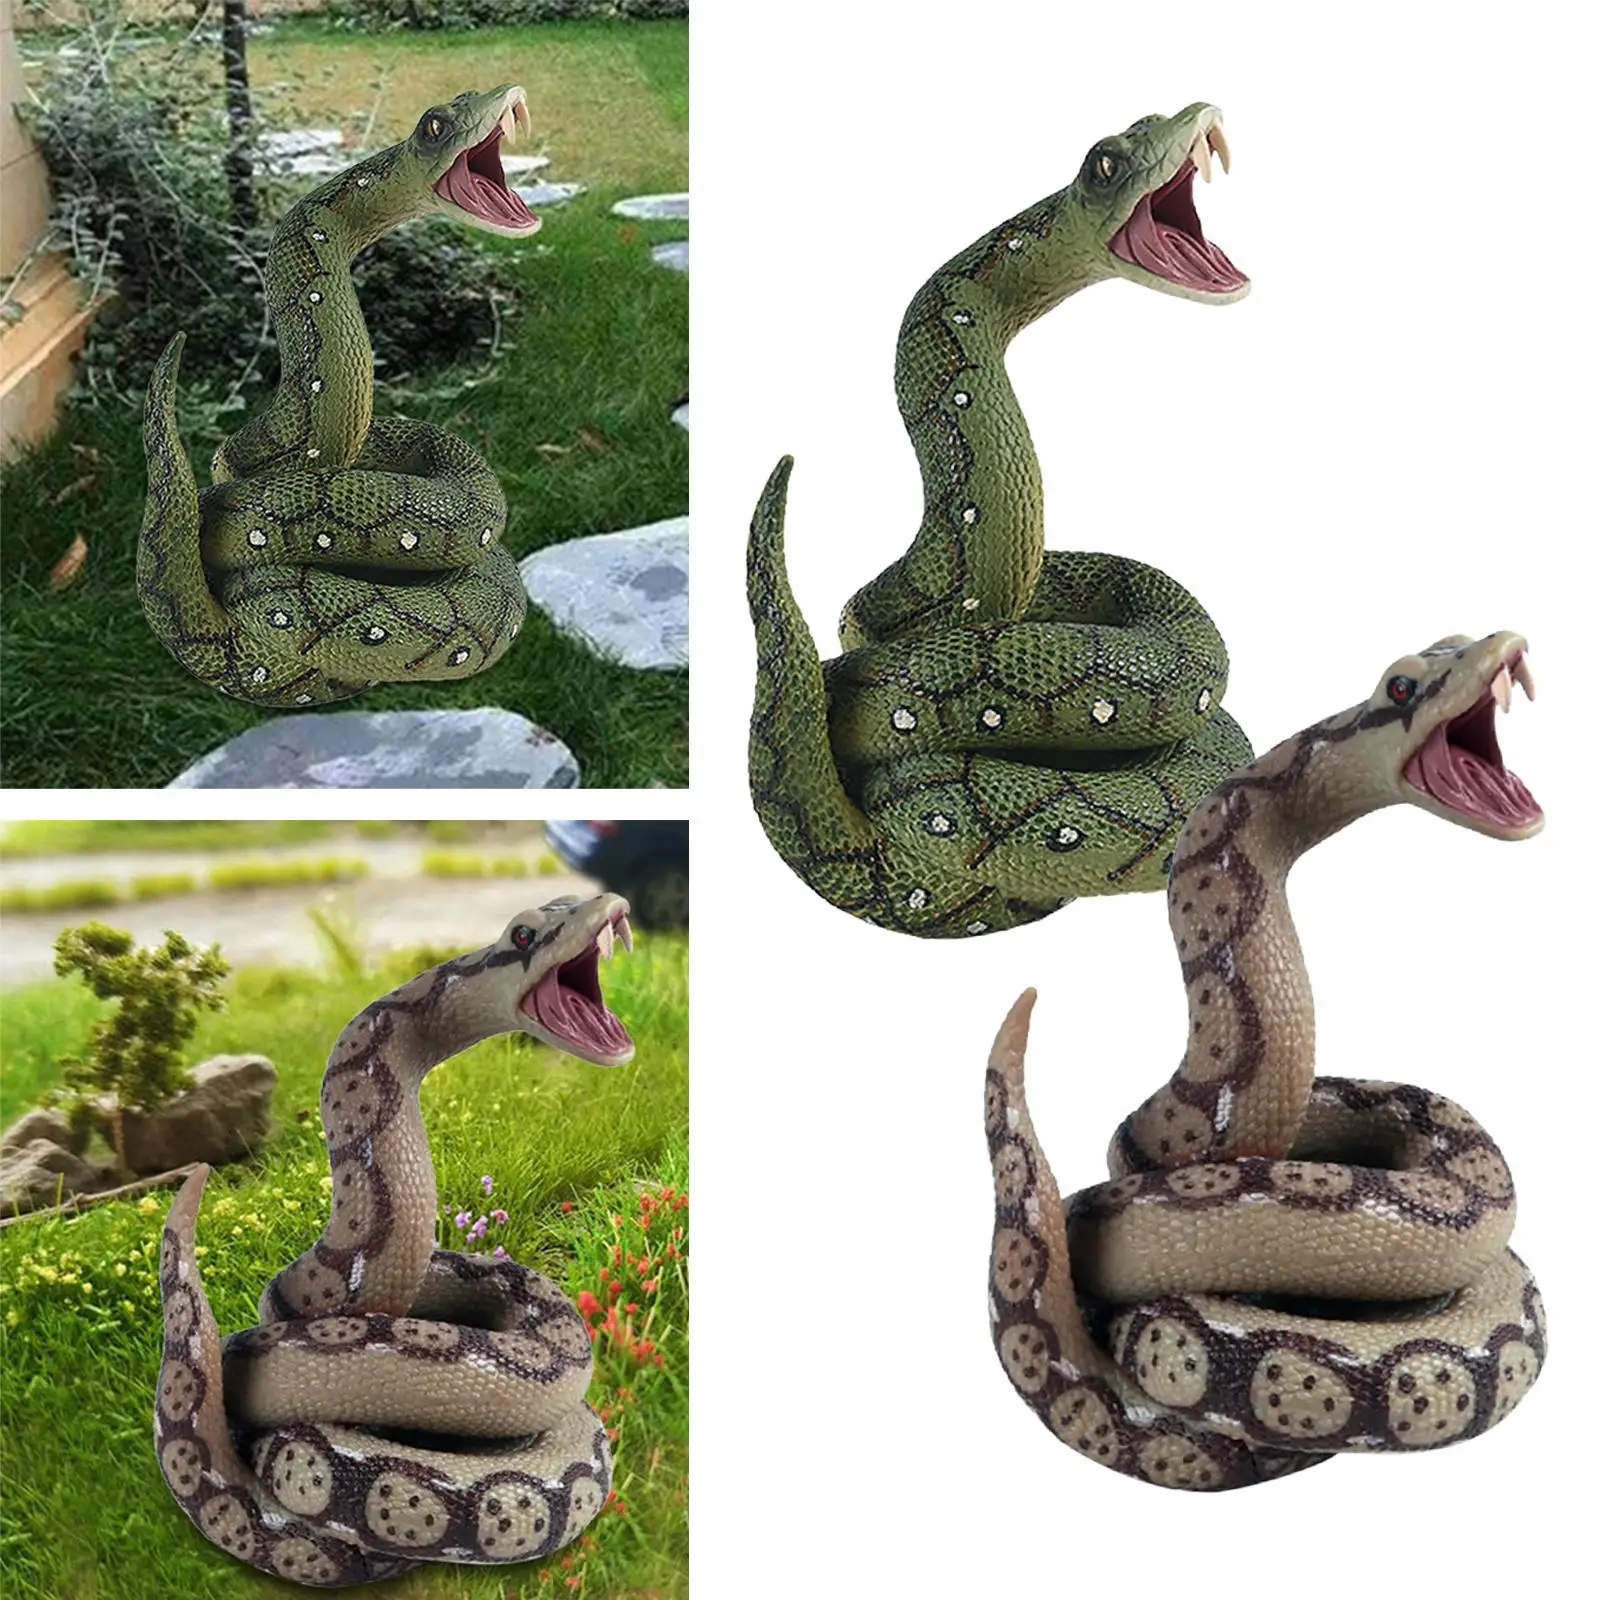 Snake Model Toy Python Model Toys Party Favor Animal Figurine Toy Horrifying